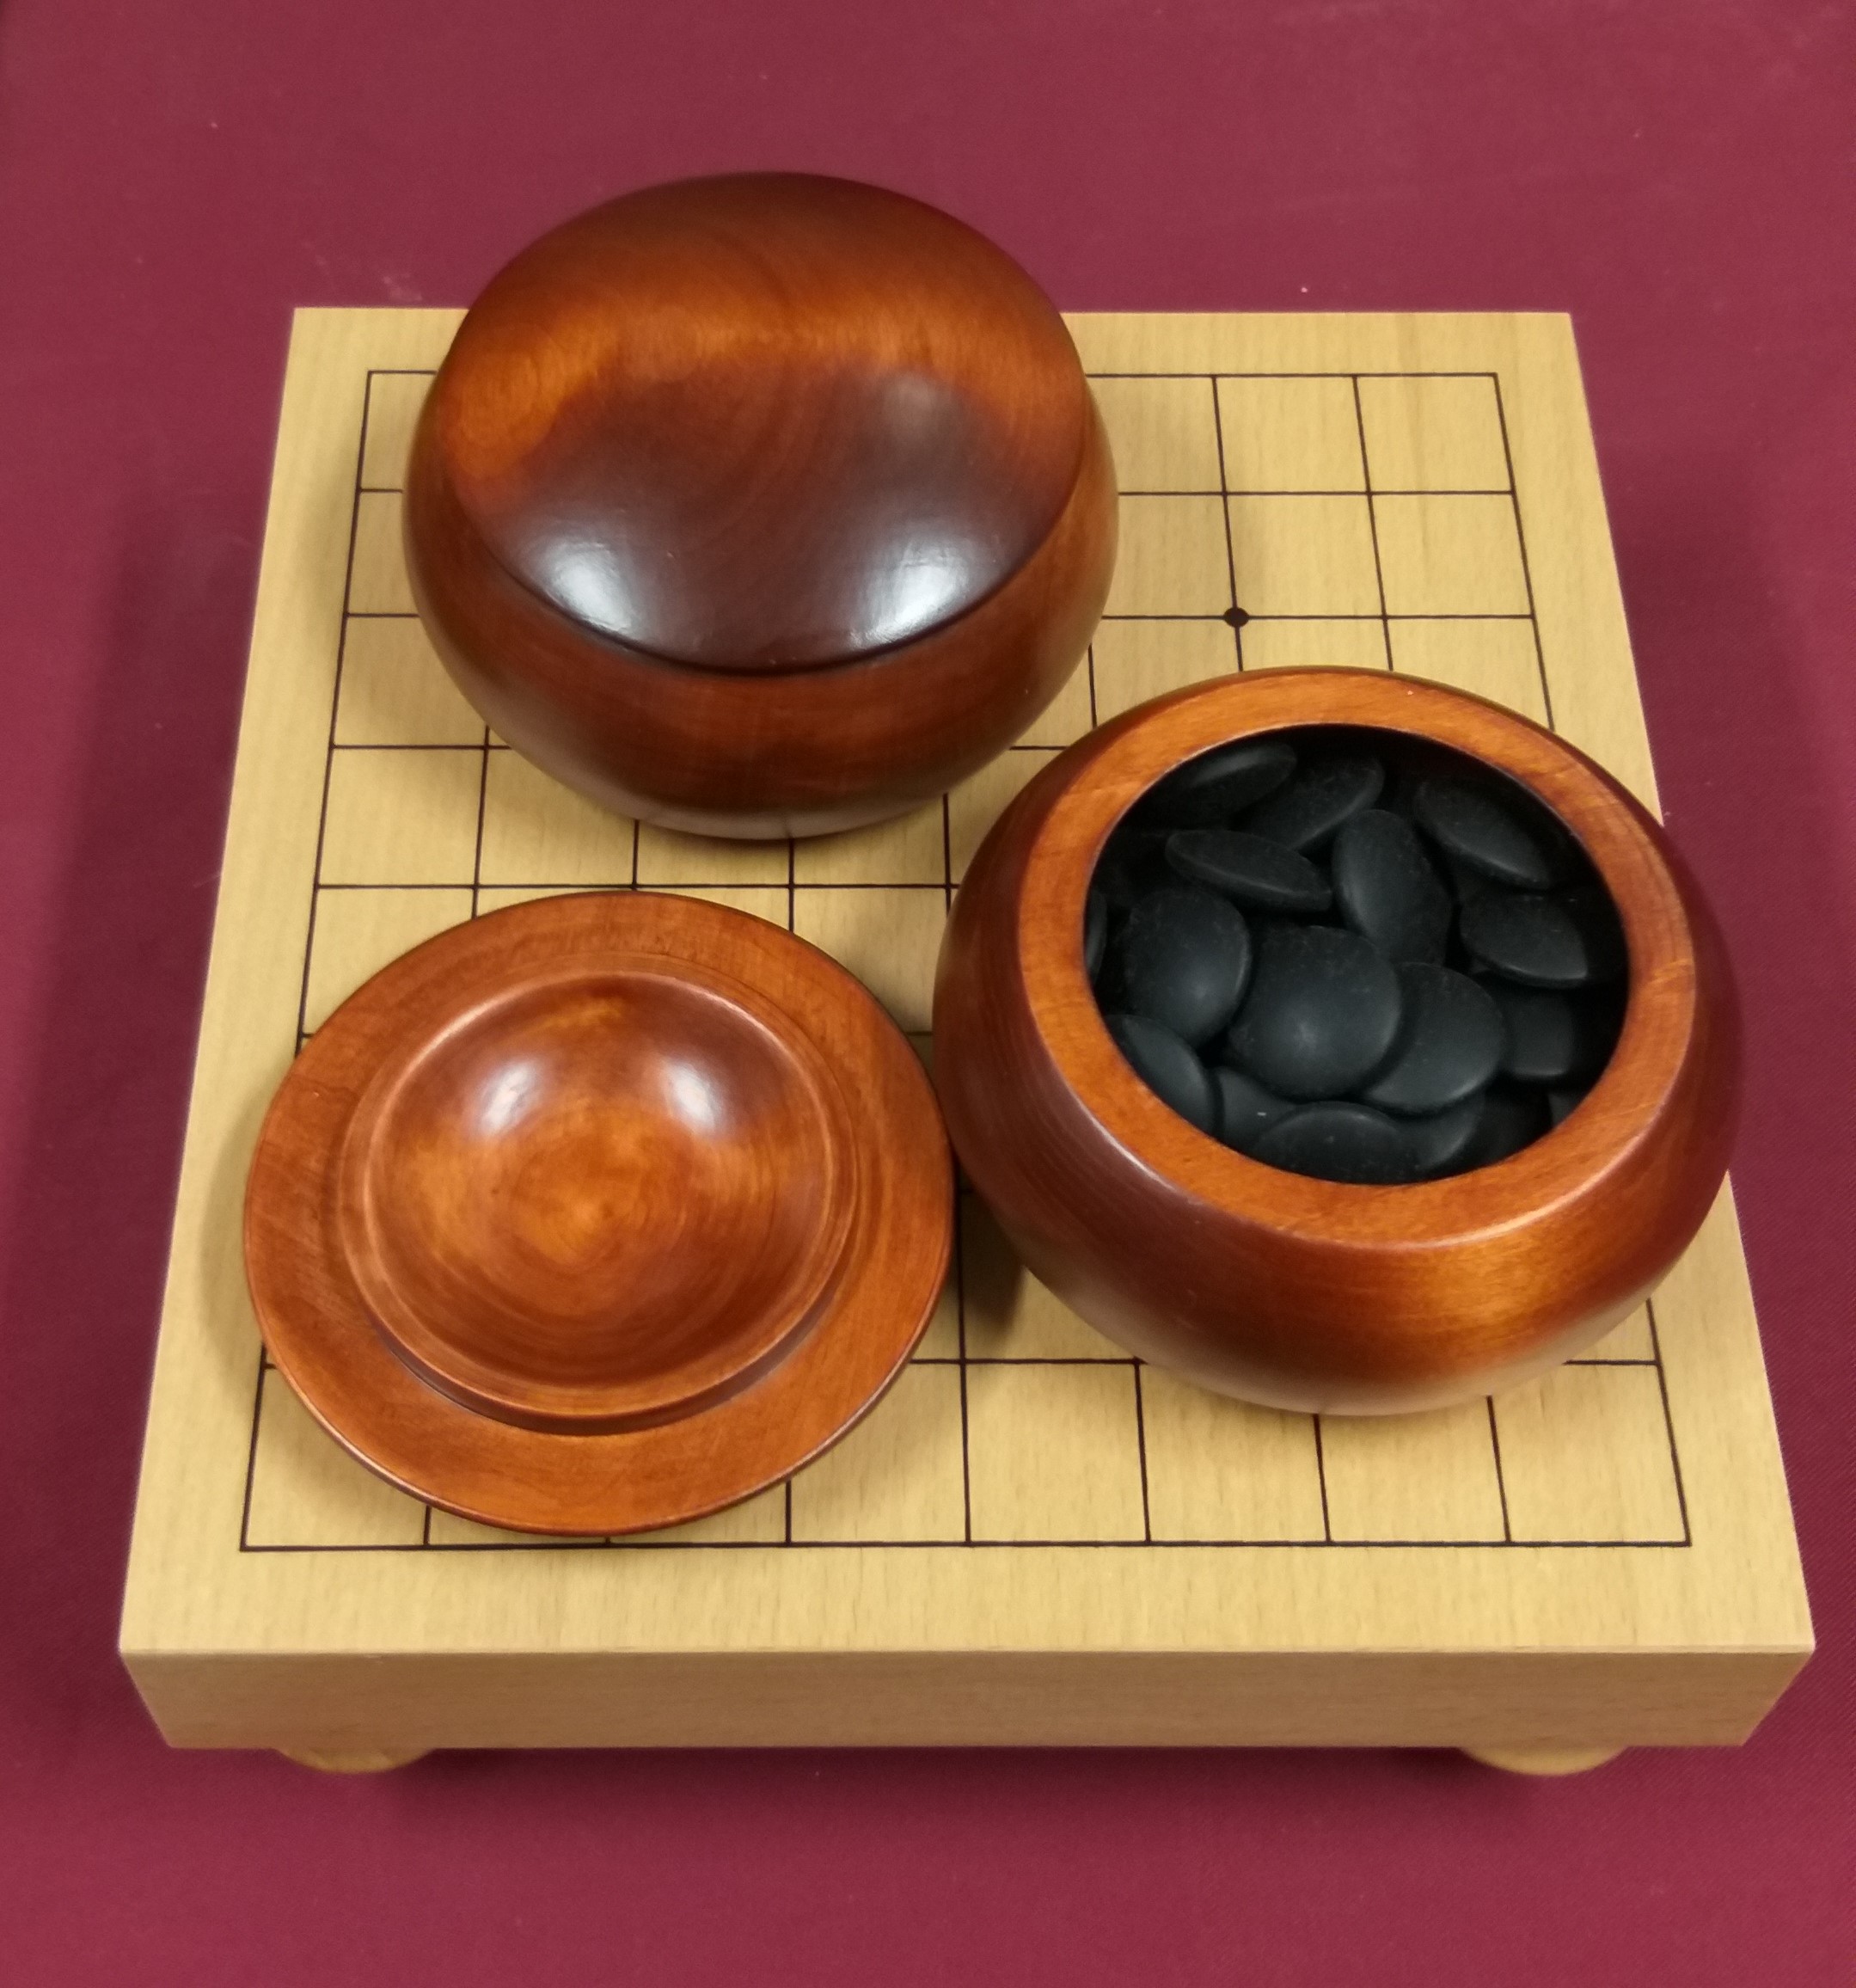 Goban 9x9 with dark bowls